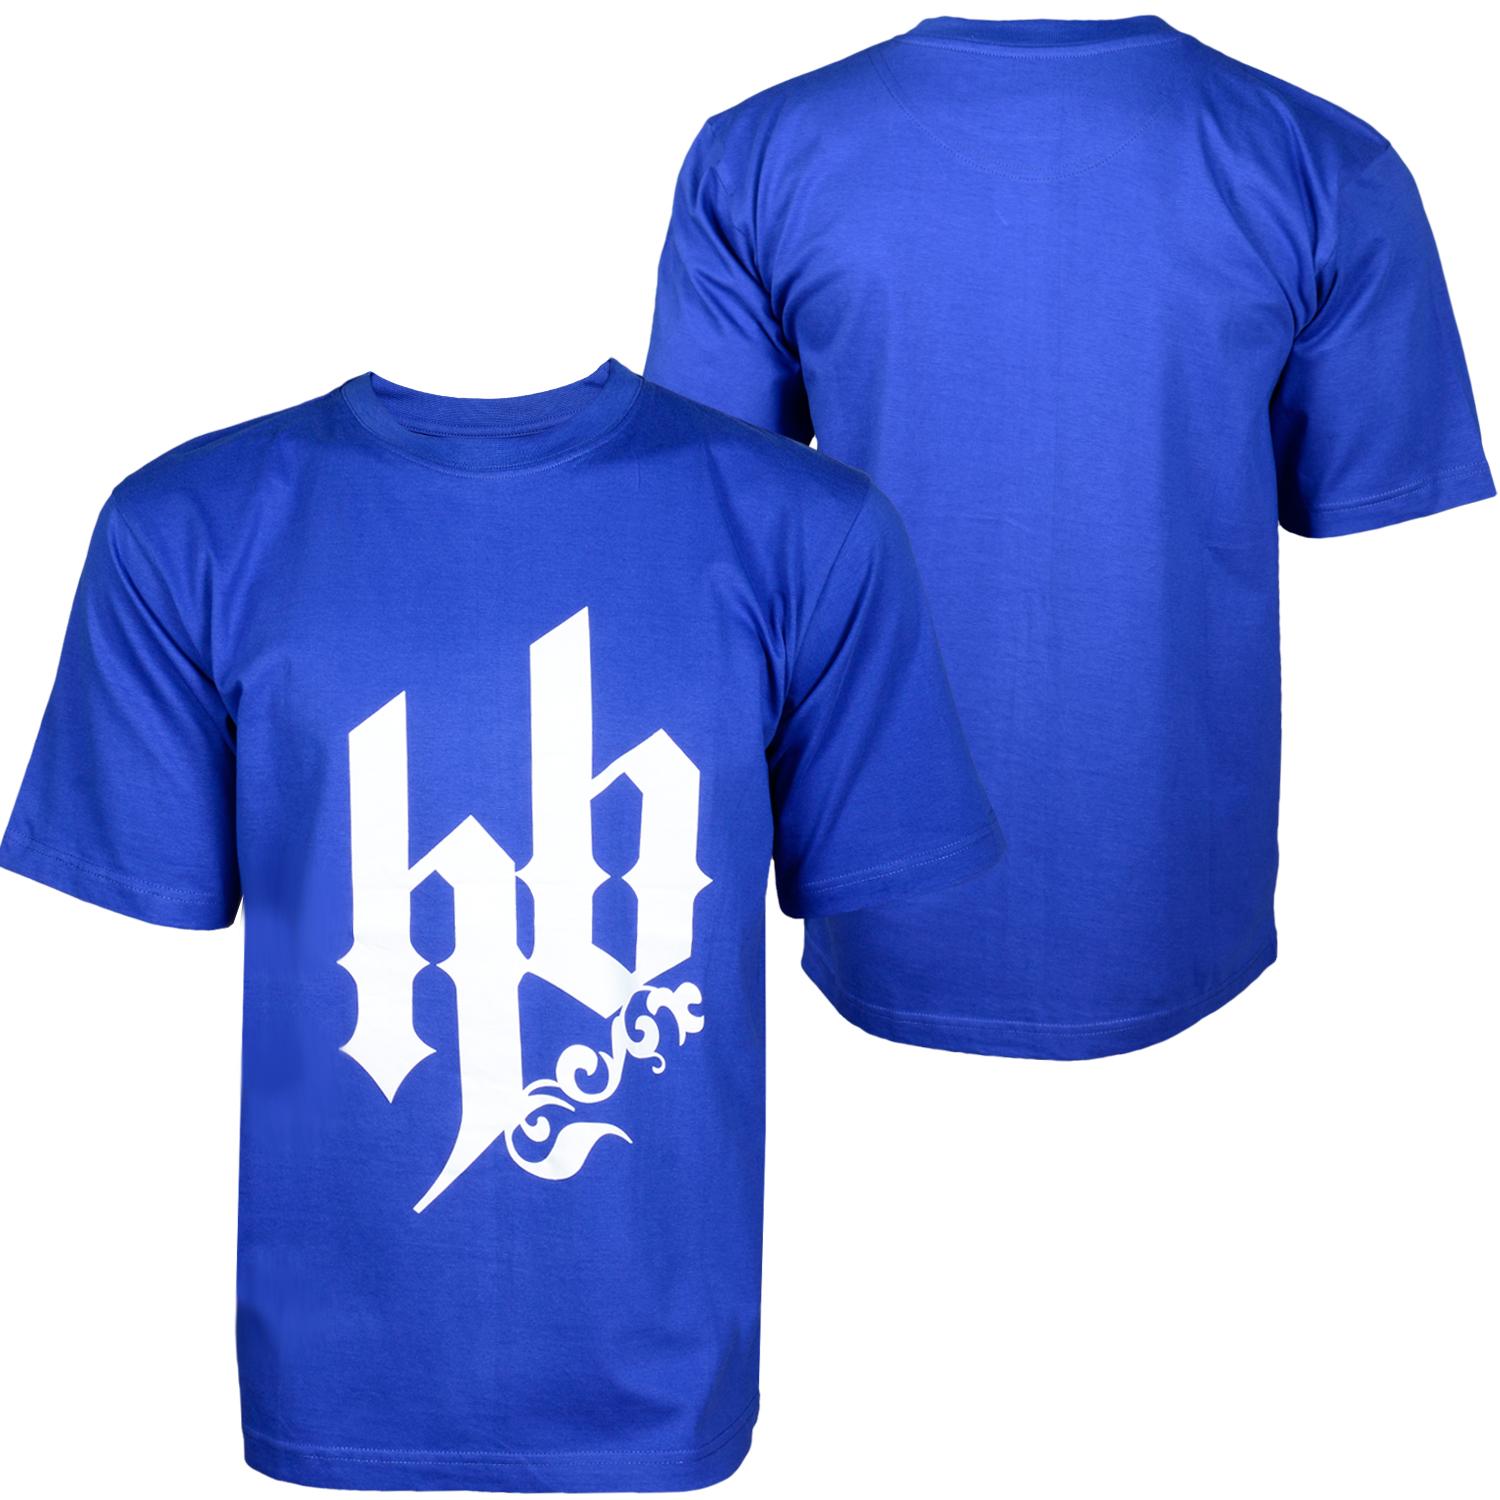 Foto Hoodboyz Basic Front Hb Camisetas Azul foto 174543